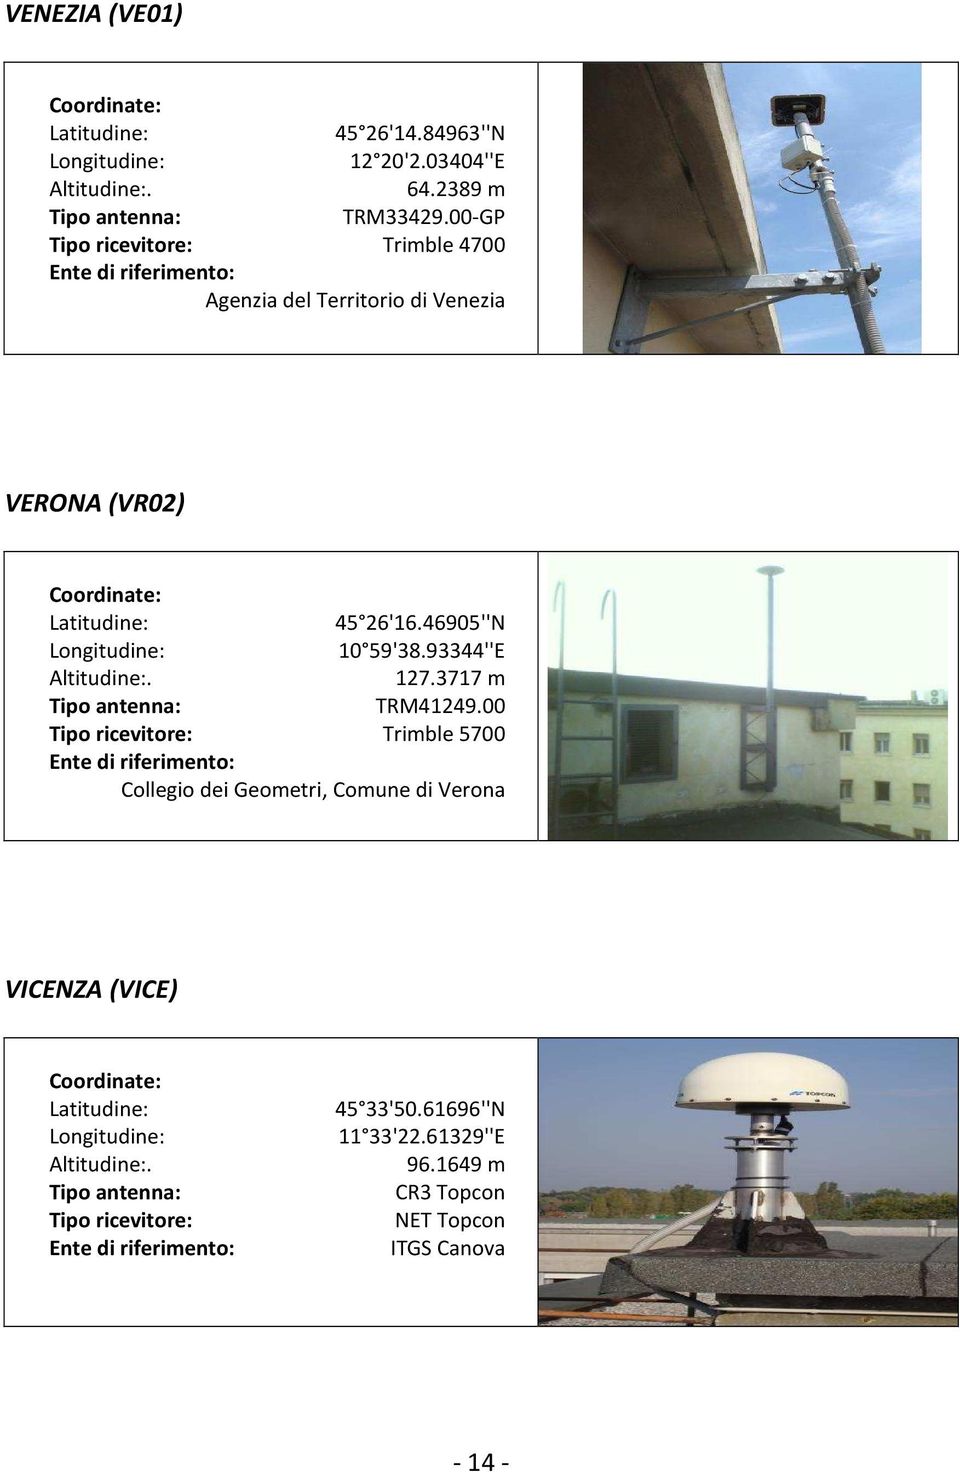 46905''N Longitudine: 10 59'38.93344''E Altitudine:. 127.3717 m Tipo antenna: TRM41249.